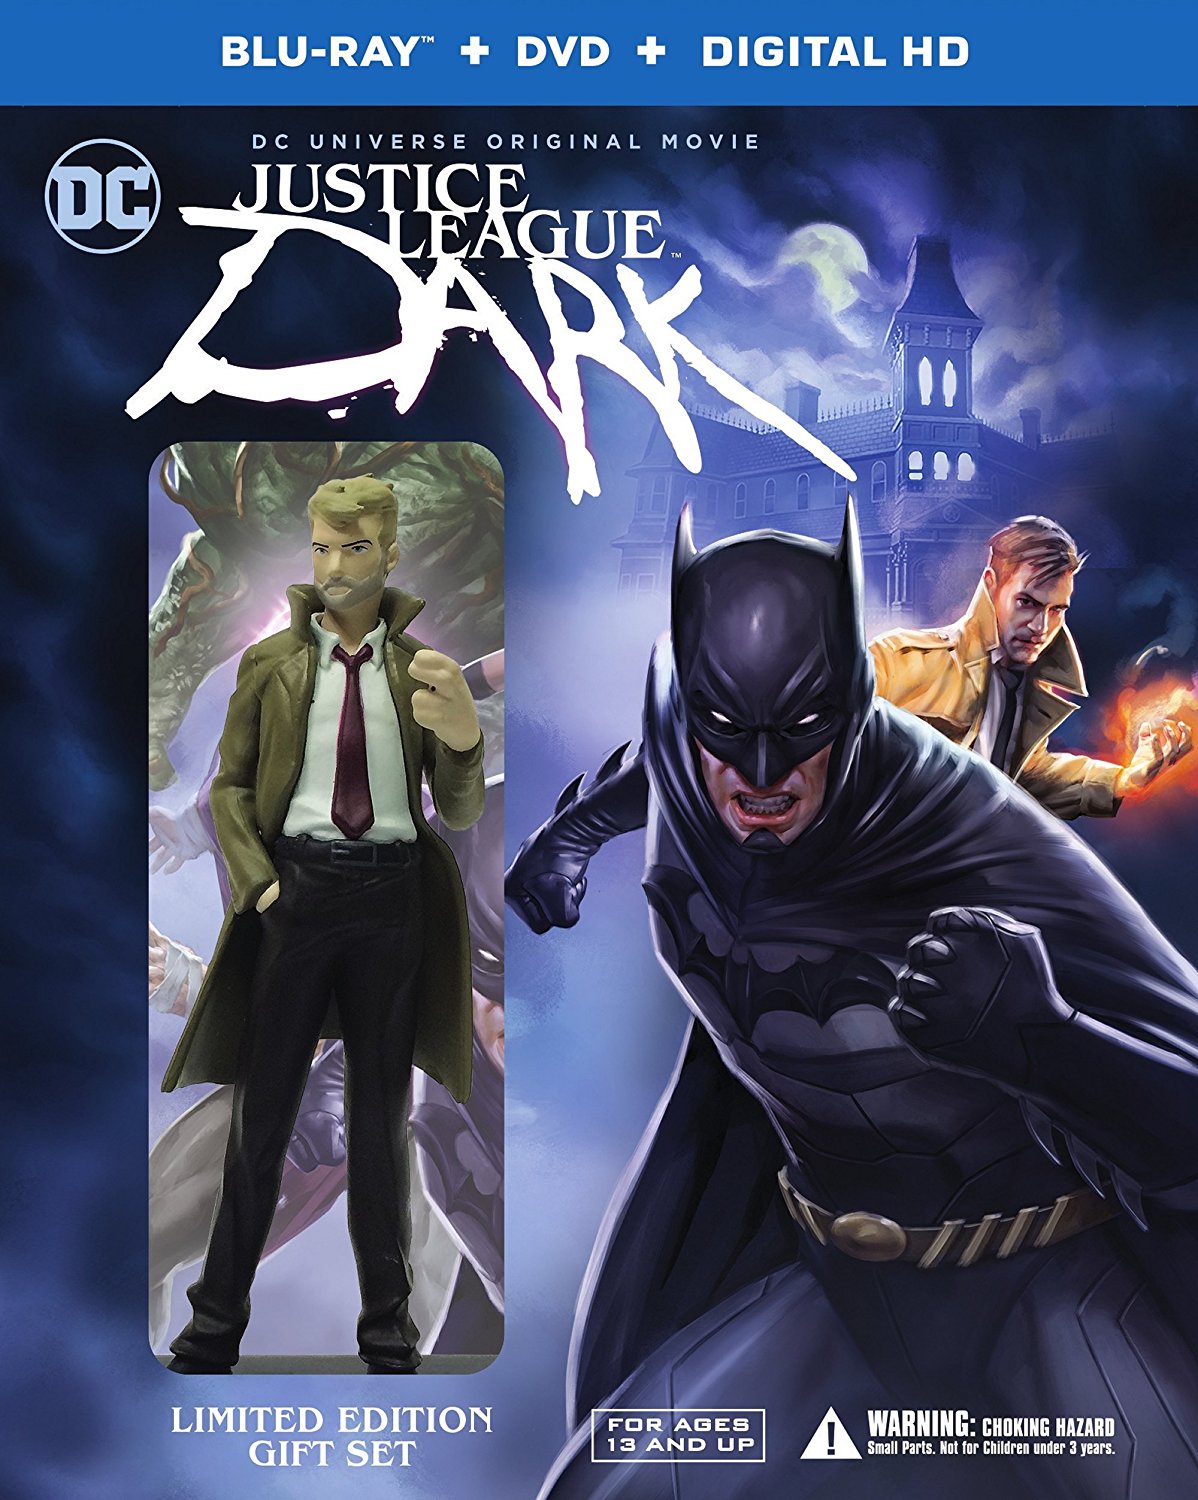 Justice League Dark movie blu-ray